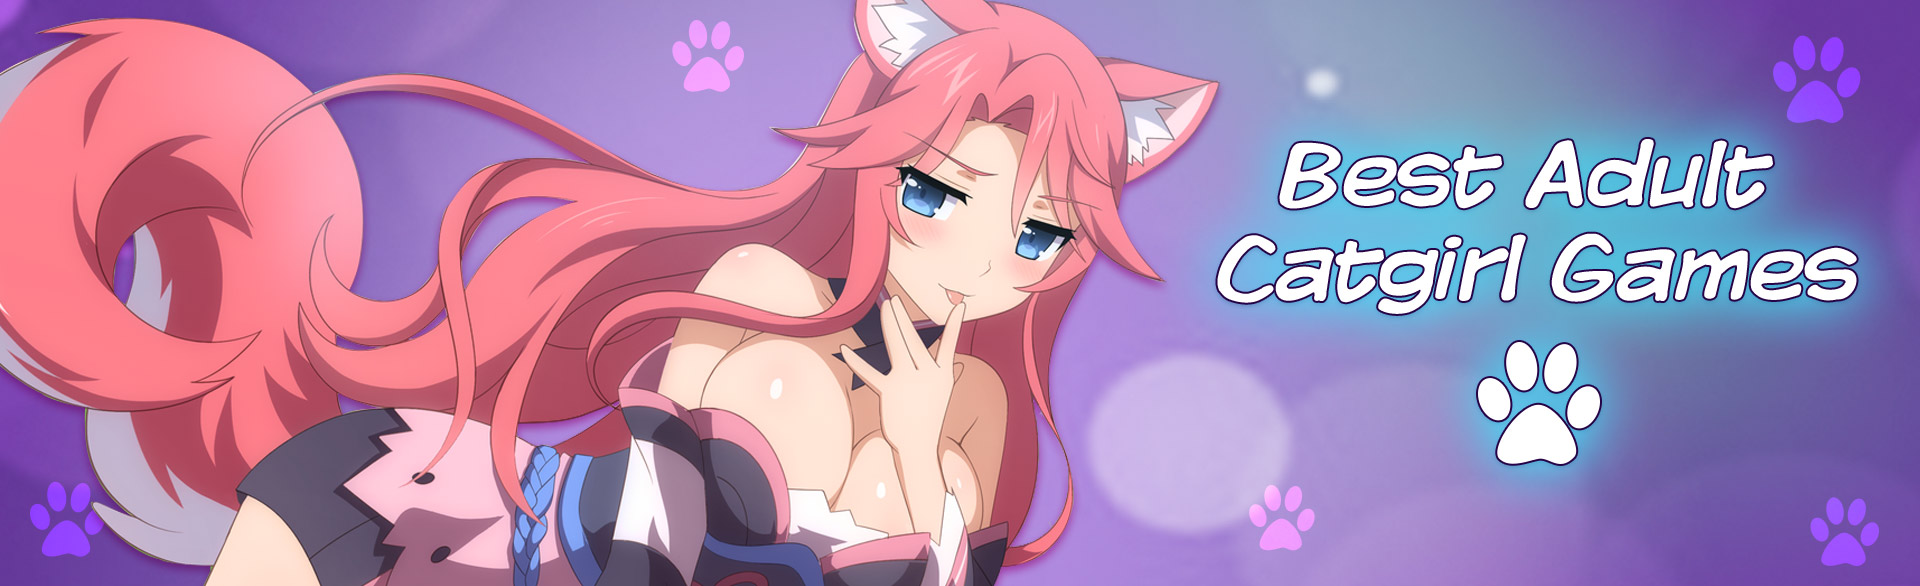 Naughty Anime Cat Girls Porn - Best Adult Catgirl Games!